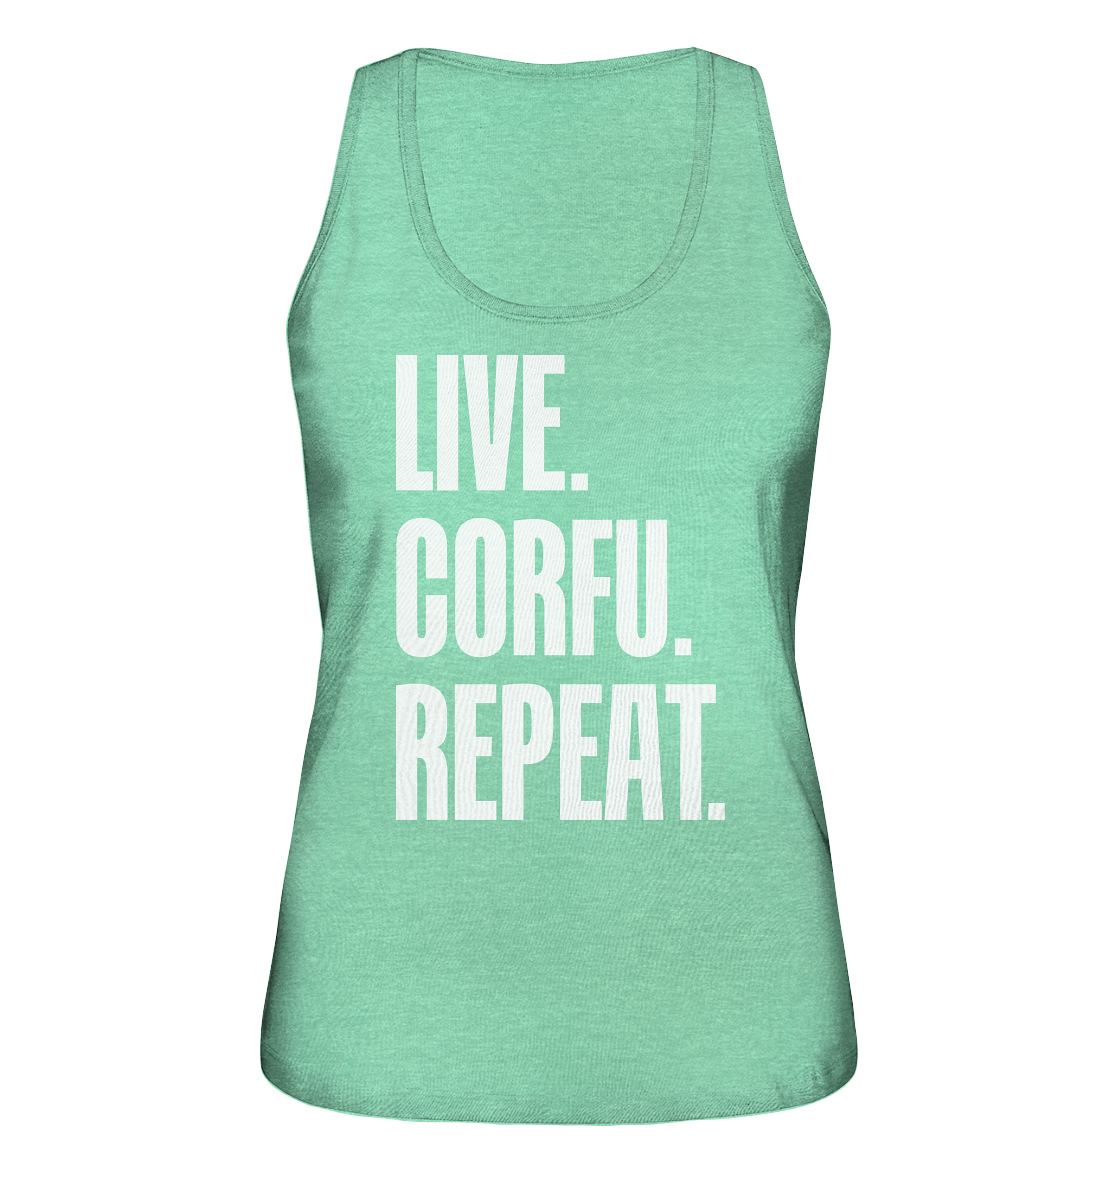 LIVE. CORFU. REPEAT. - Ladies organic tank top